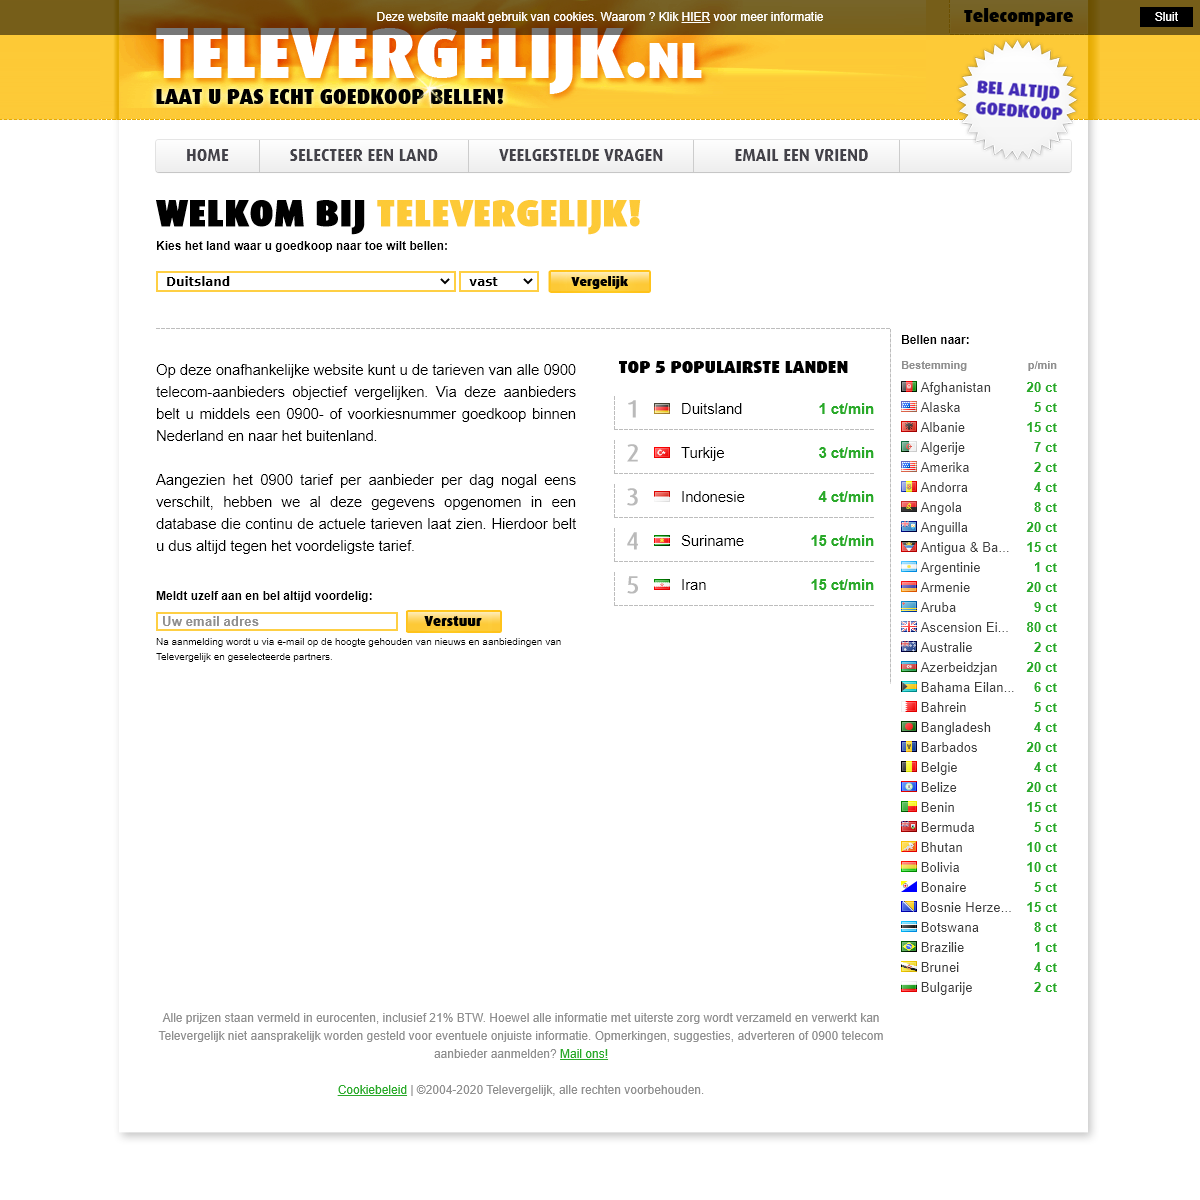 A complete backup of televergelijk.nl